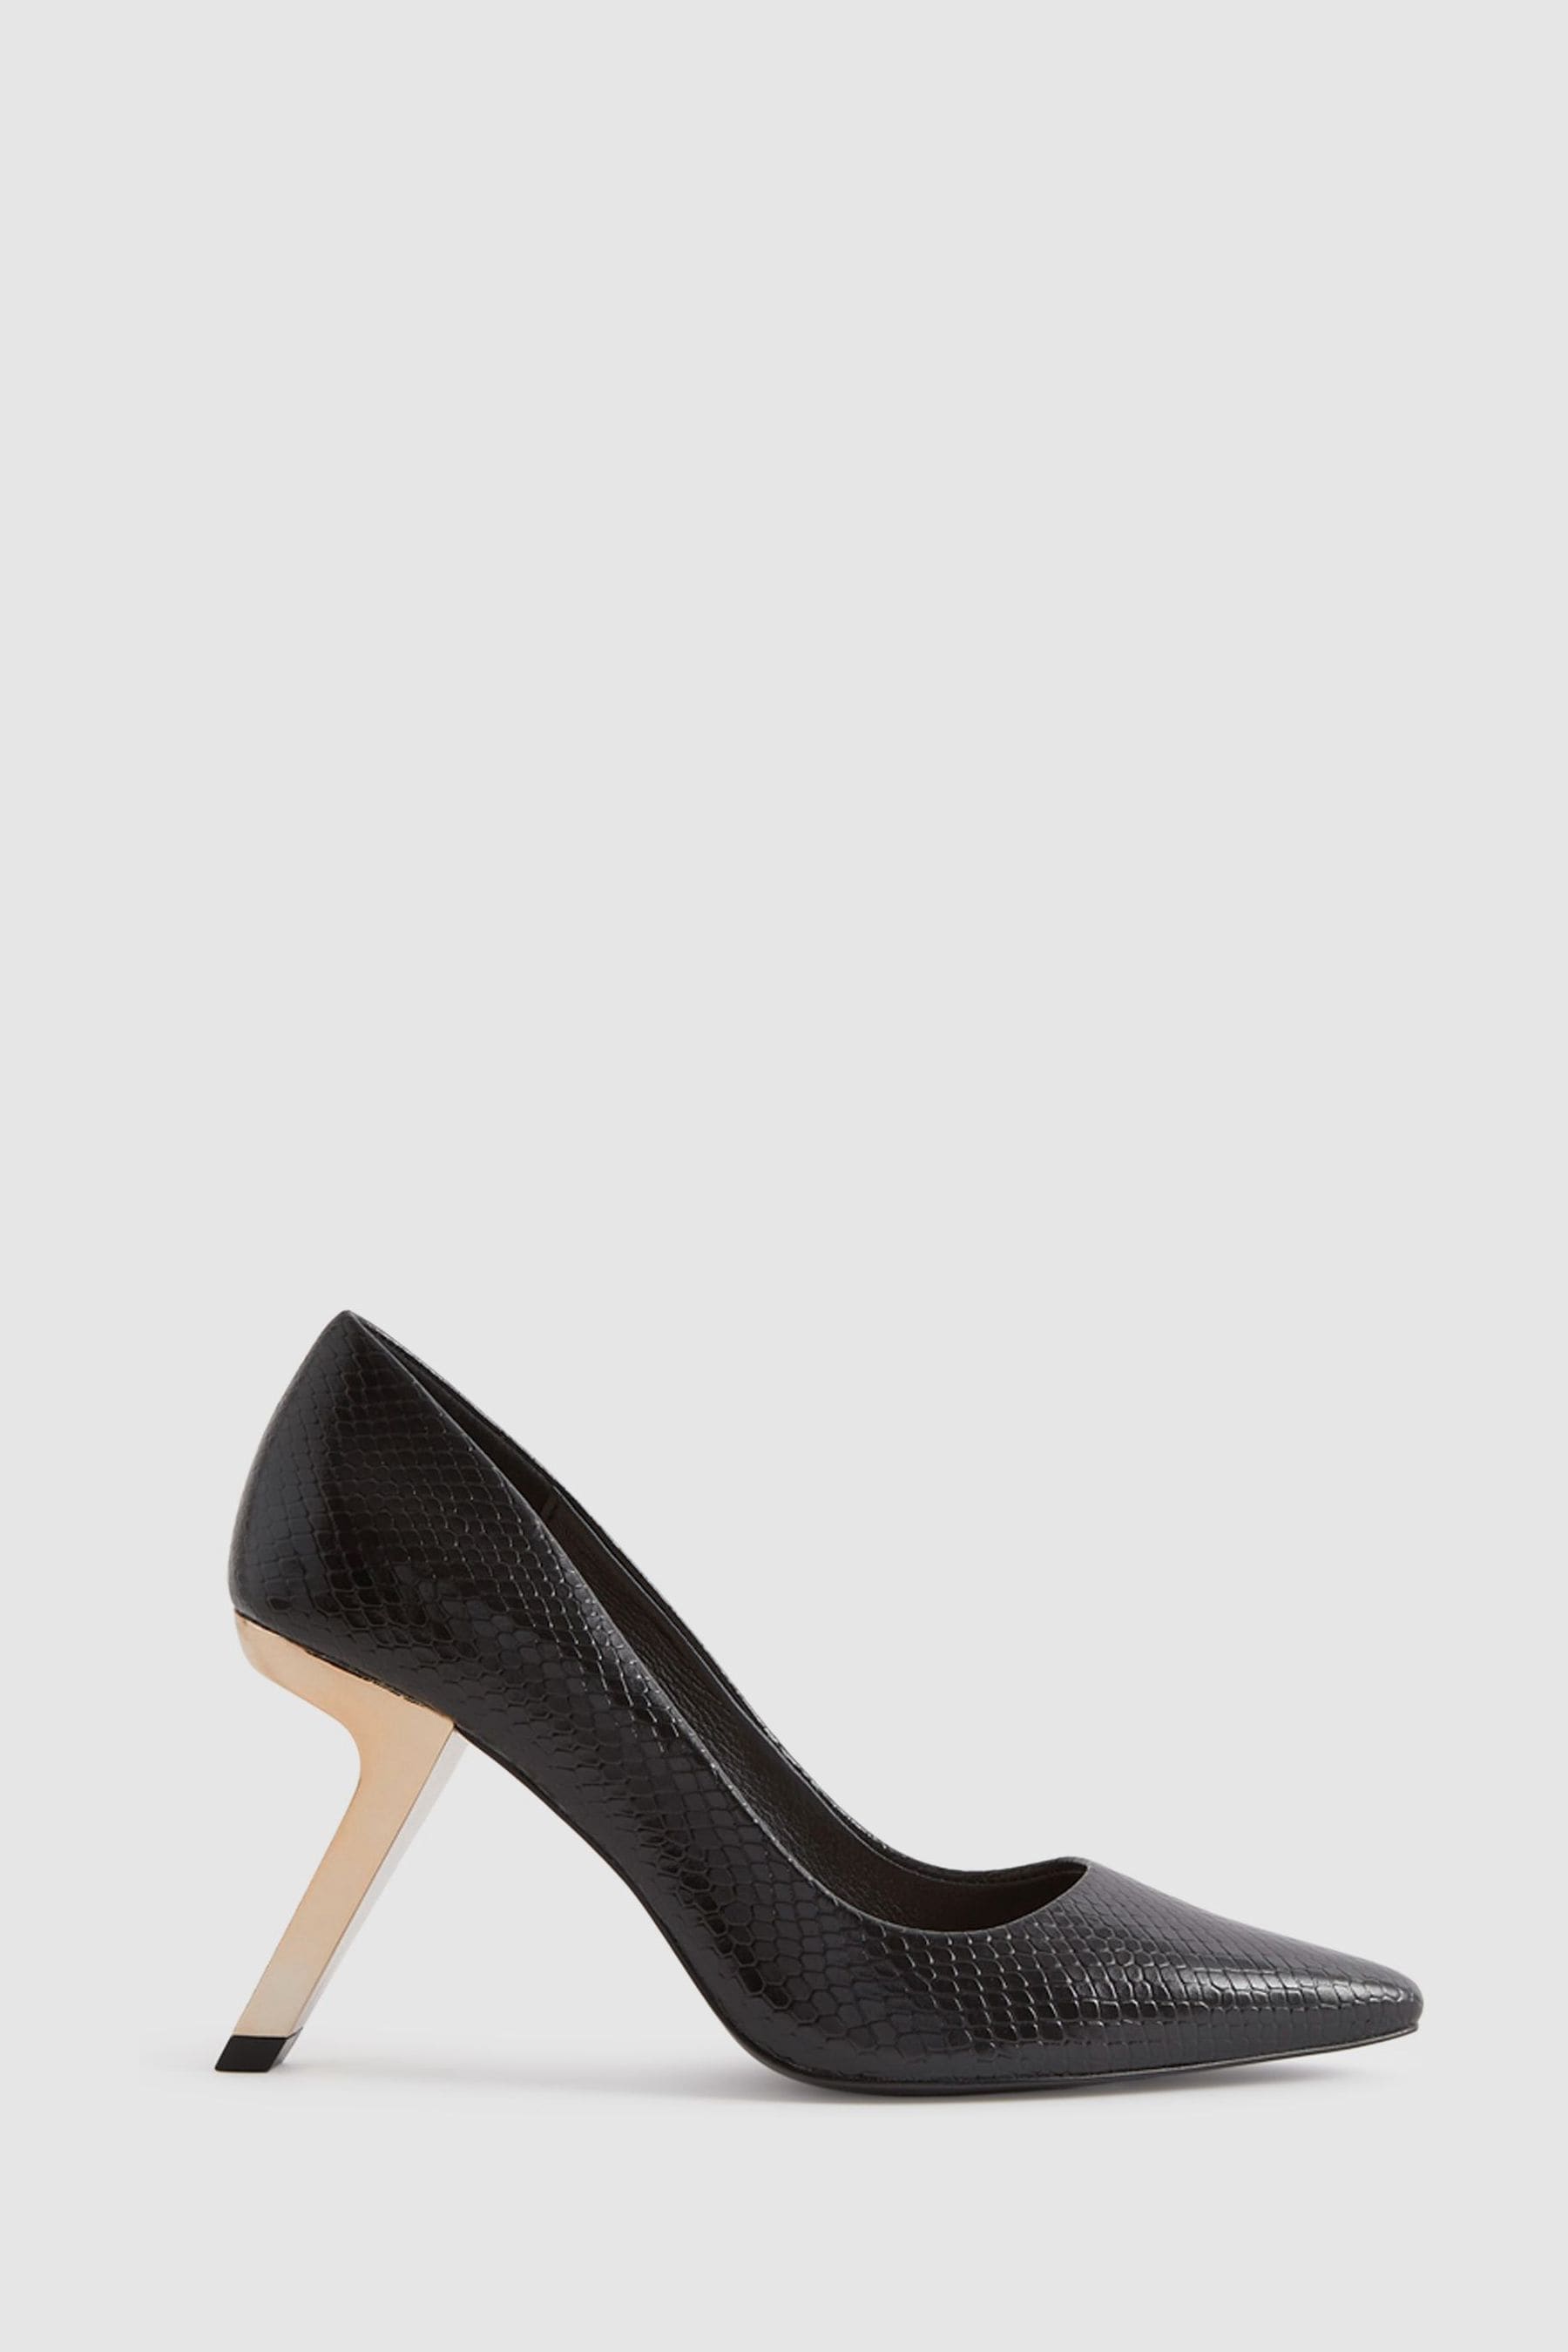 Reiss Monroe - Black Leather Angled Heel Court Shoes, Uk 6 Eu 39